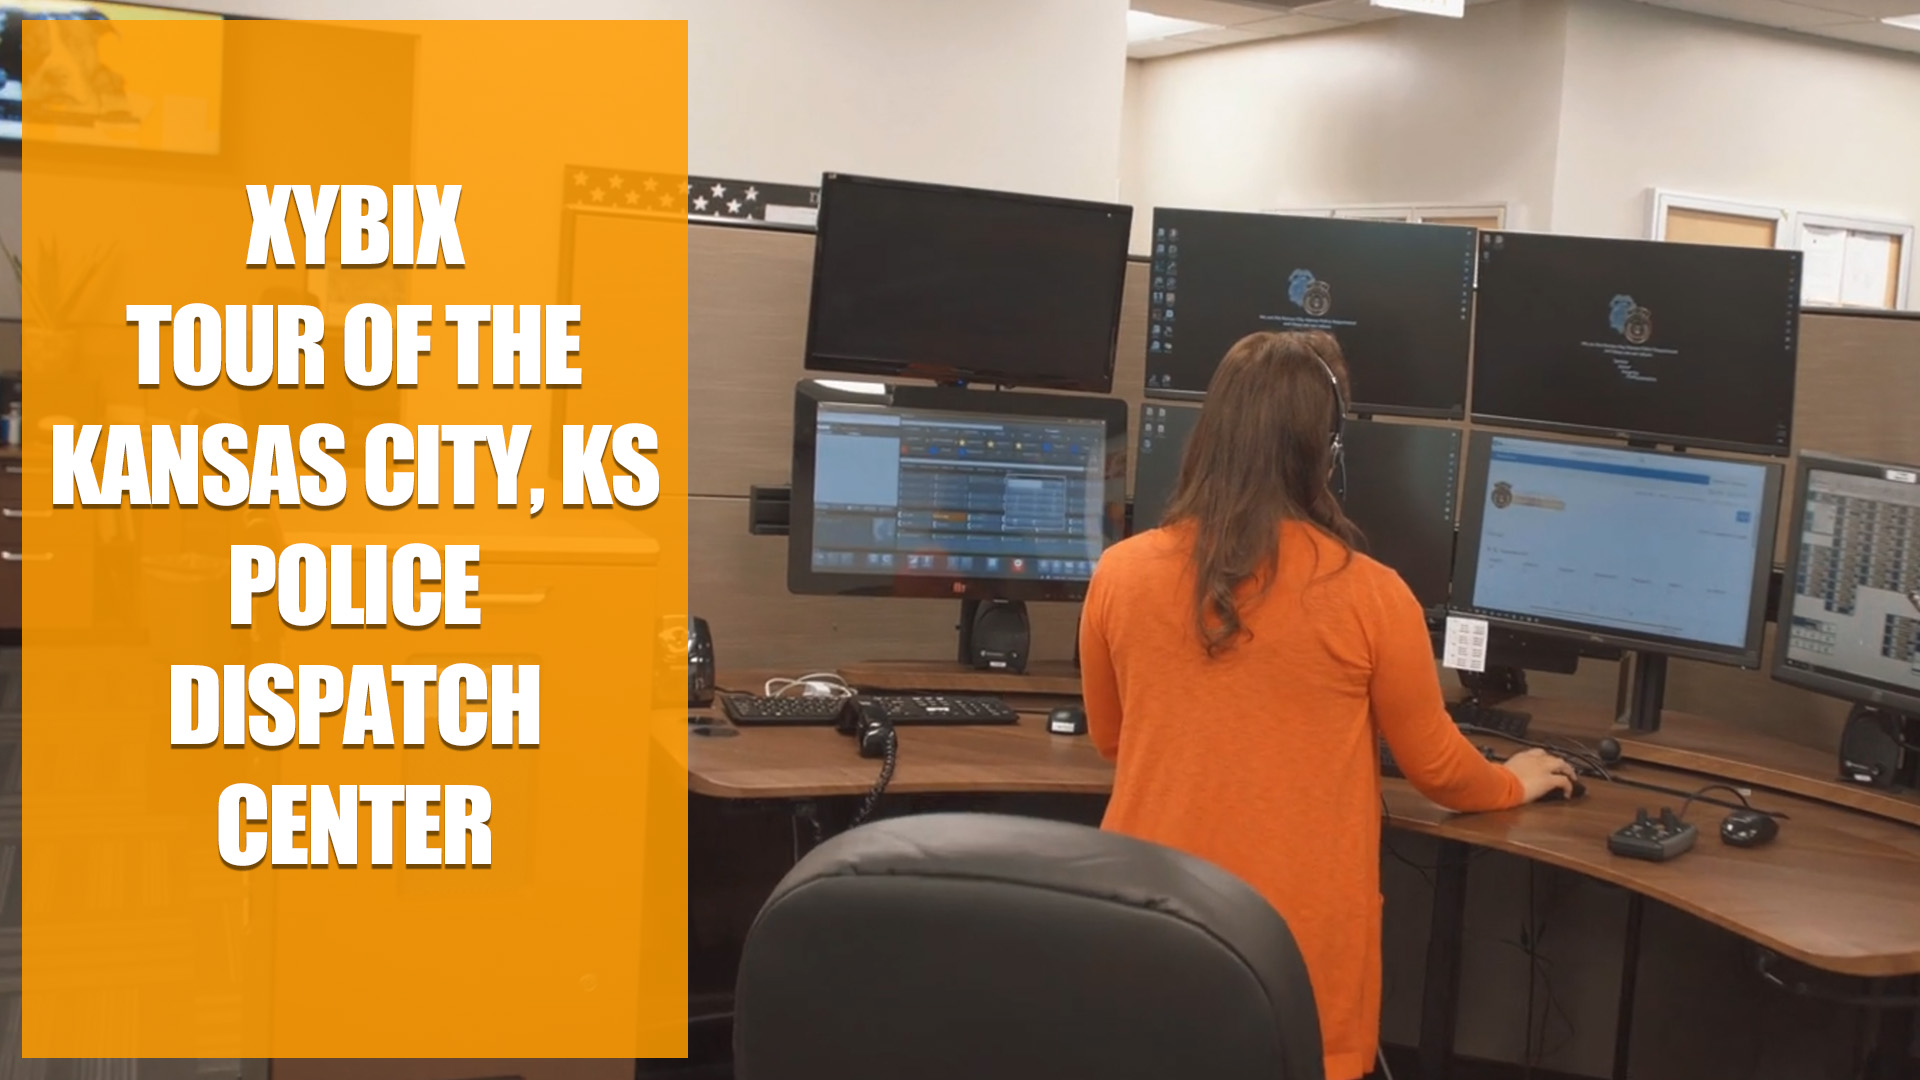 Xybix Tour of the Kansas City, KS. Police Dispatch Center